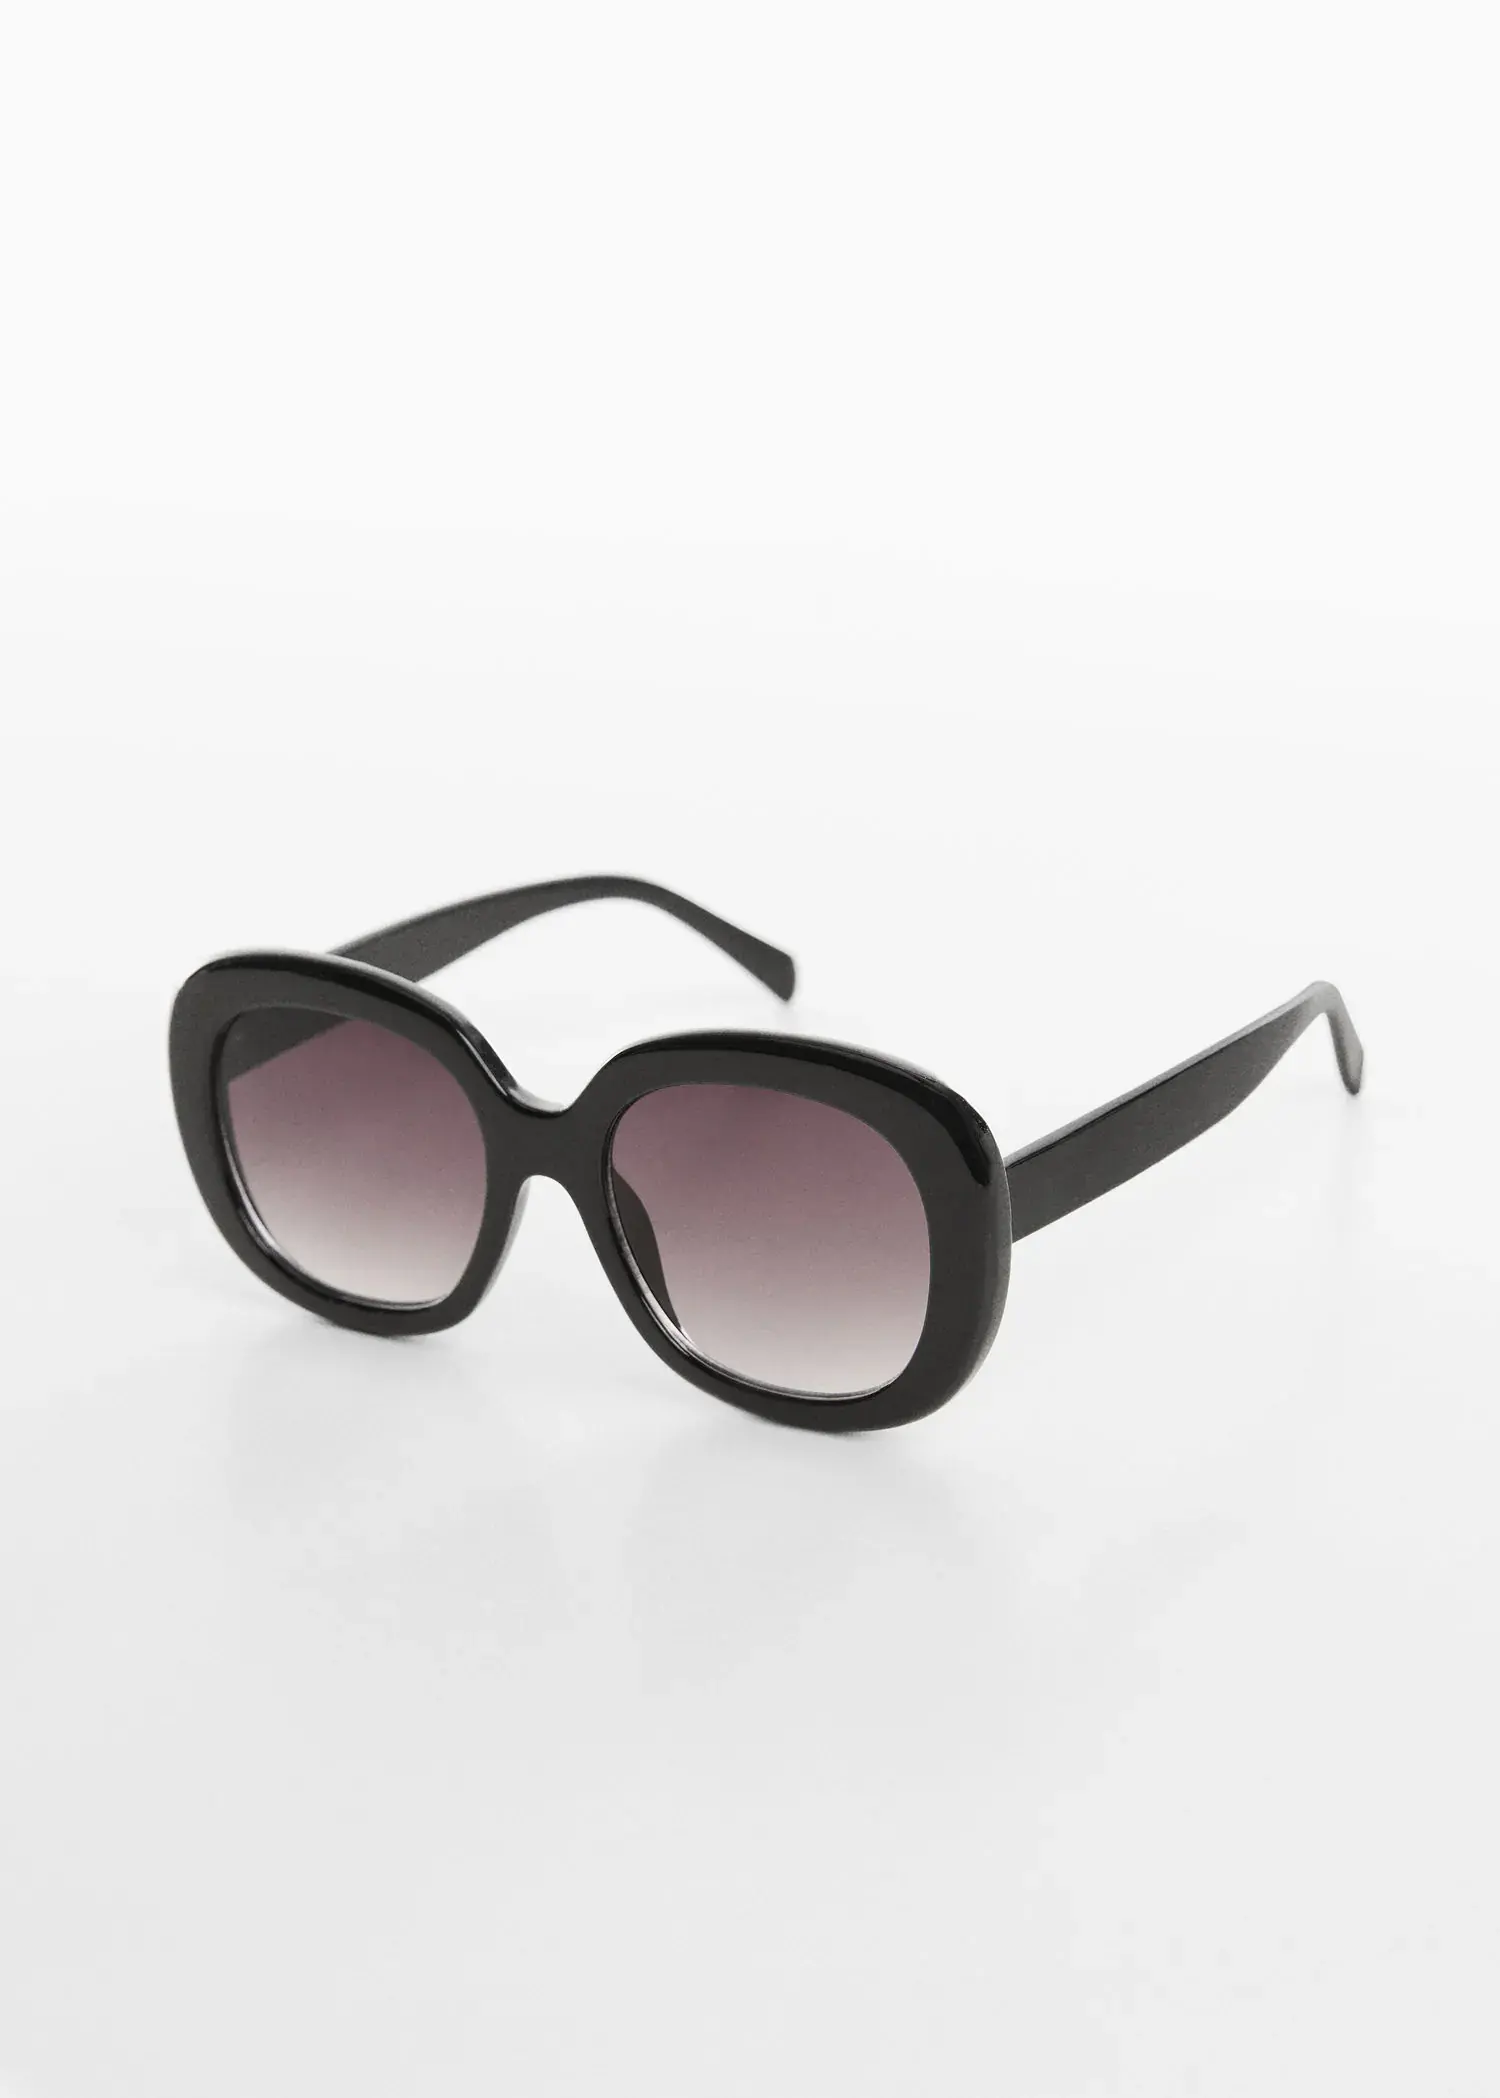 Mango Maxi-frame sunglasses. 2